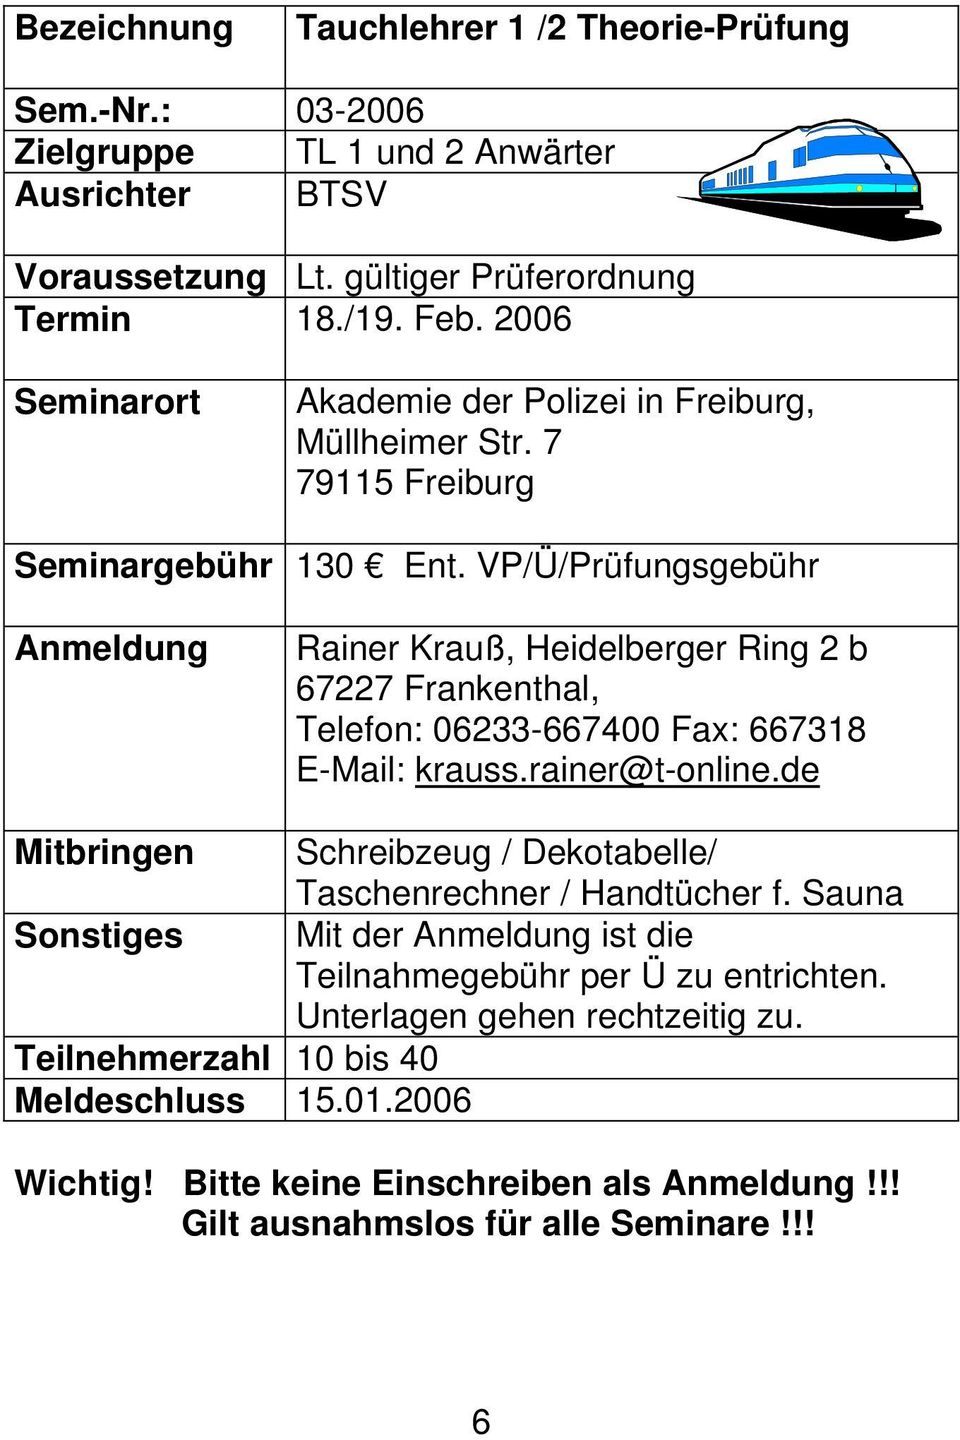 VP/Ü/Prüfungsgebühr Anmeldung Rainer Krauß, Heidelberger Ring 2 b 67227 Frankenthal, Telefon: 06233-667400 Fax: 667318 E-Mail: krauss.rainer@t-online.